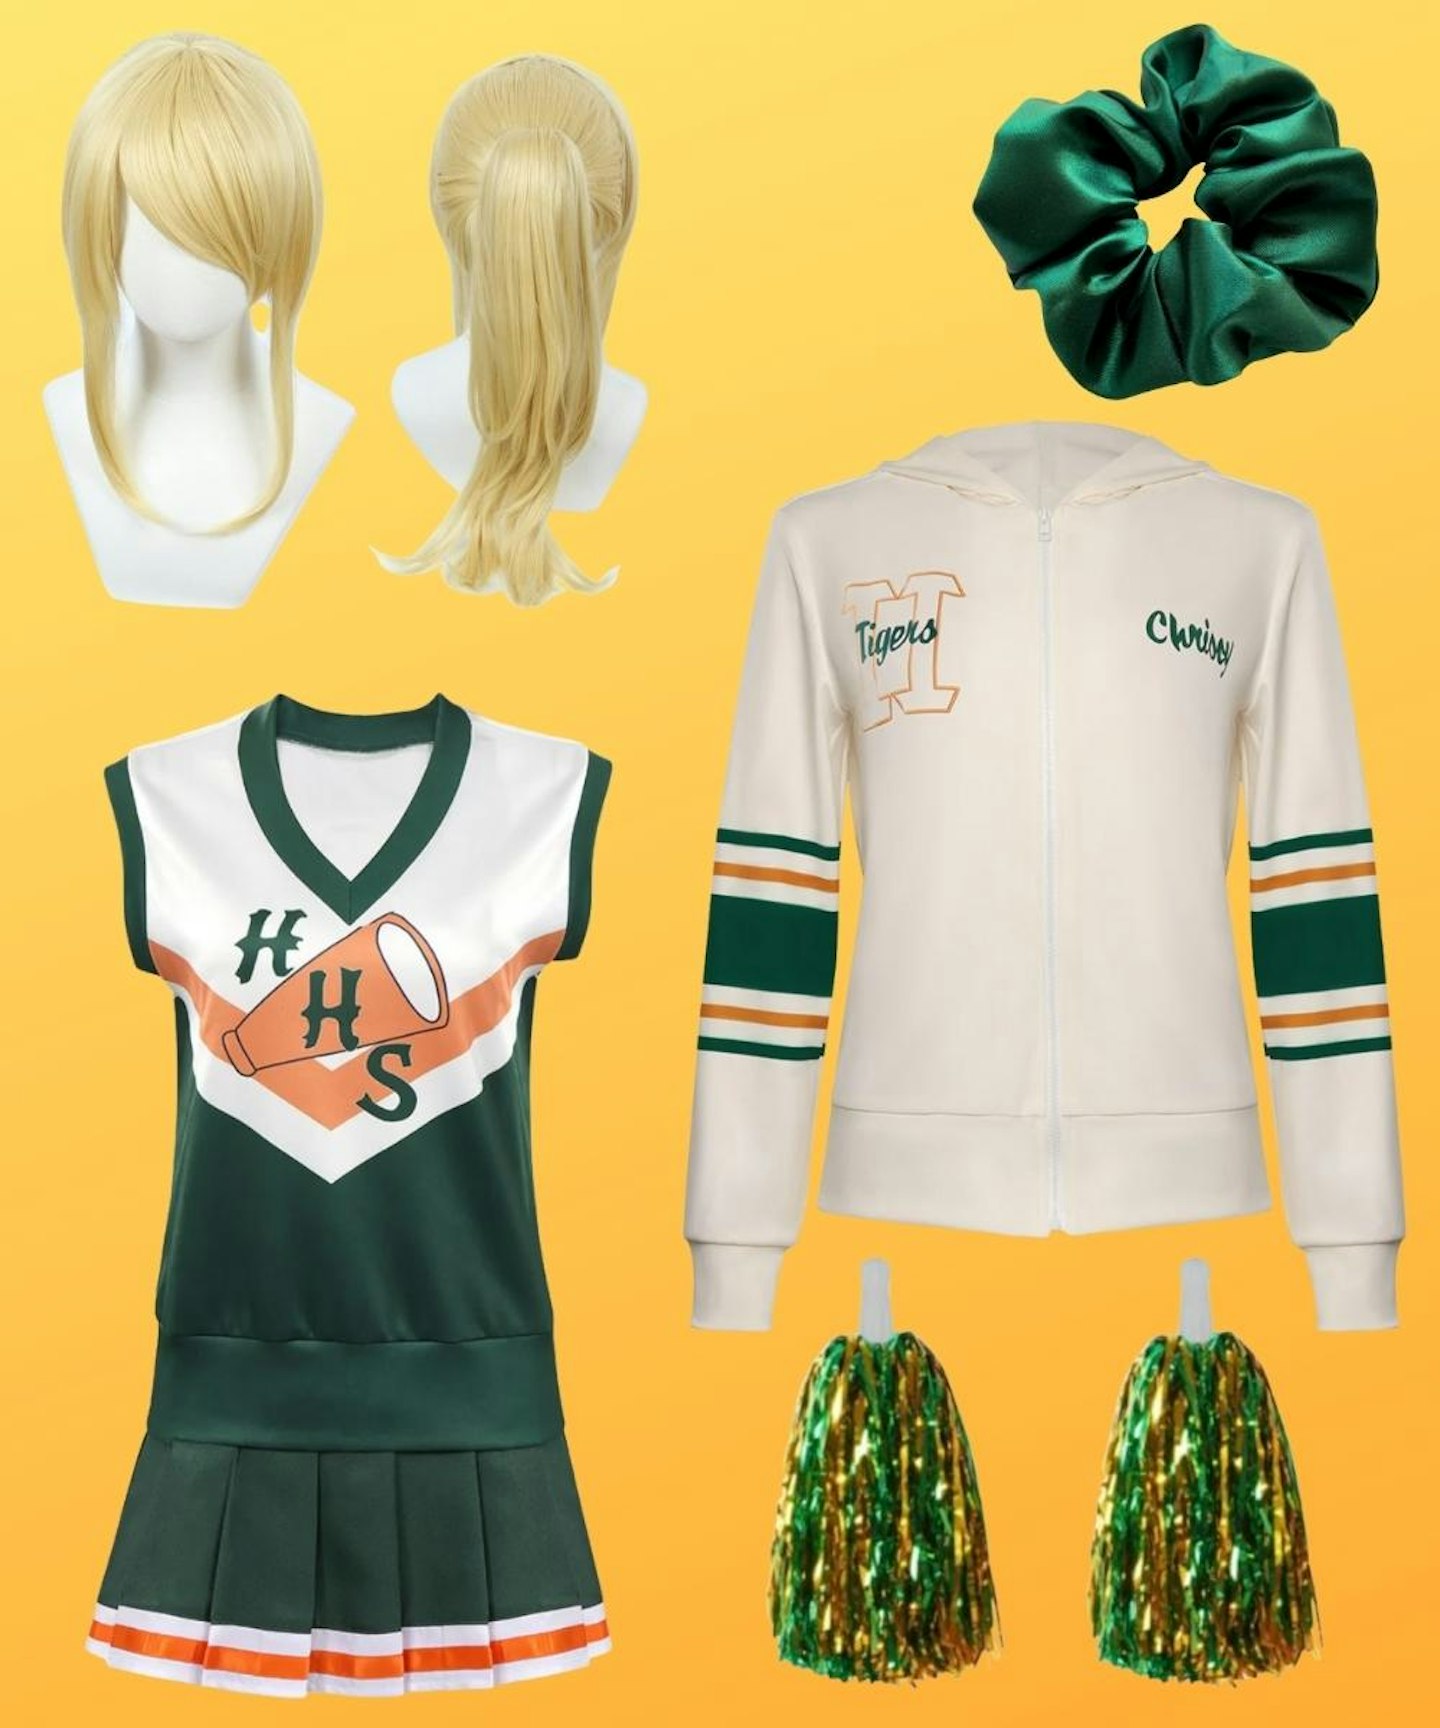 Chrissy's Hawkin Cheerleader Costume